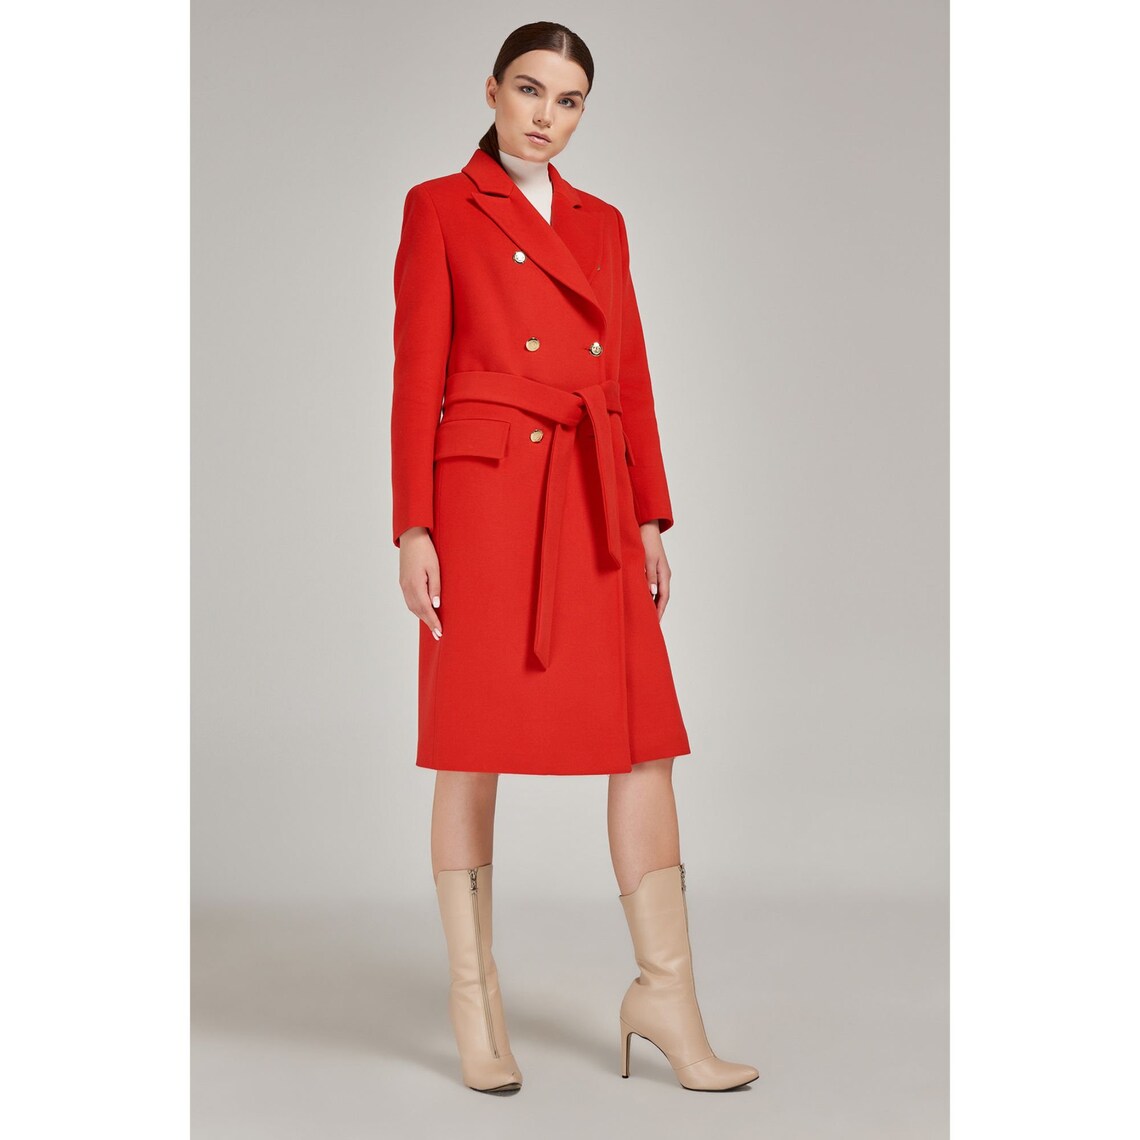 Classic Red Coat Wool Long Coat Full Length Coat Slim - Etsy UK